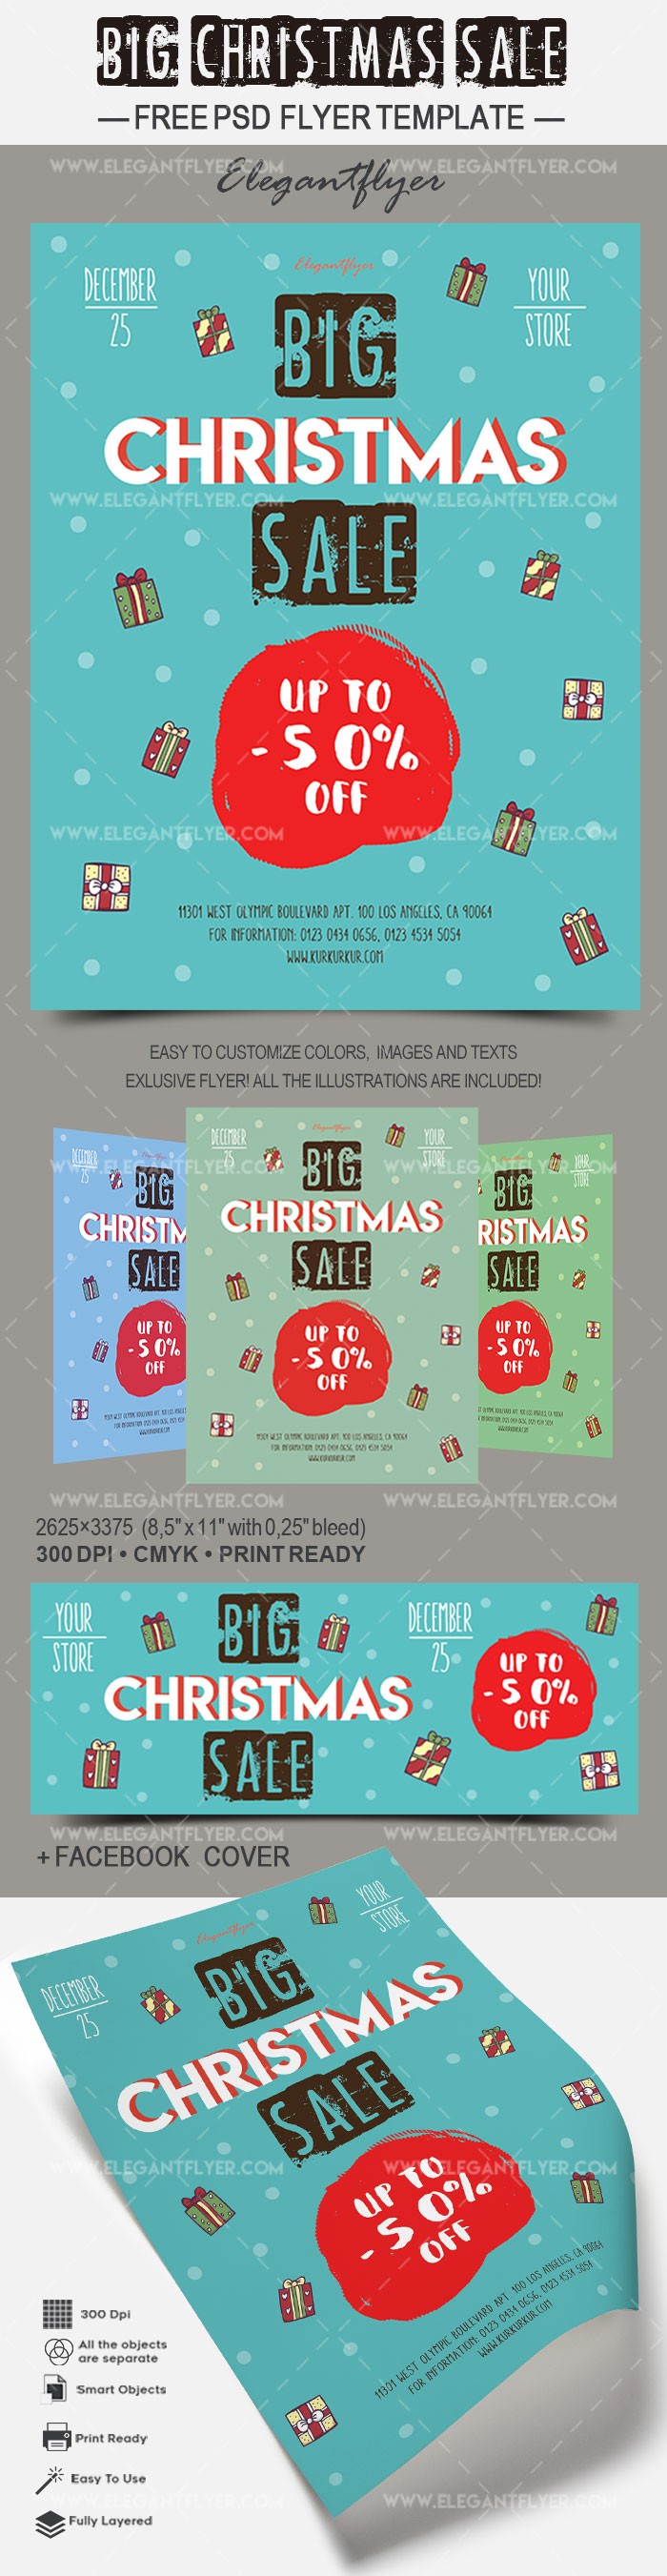 Big Christmas Sale by ElegantFlyer